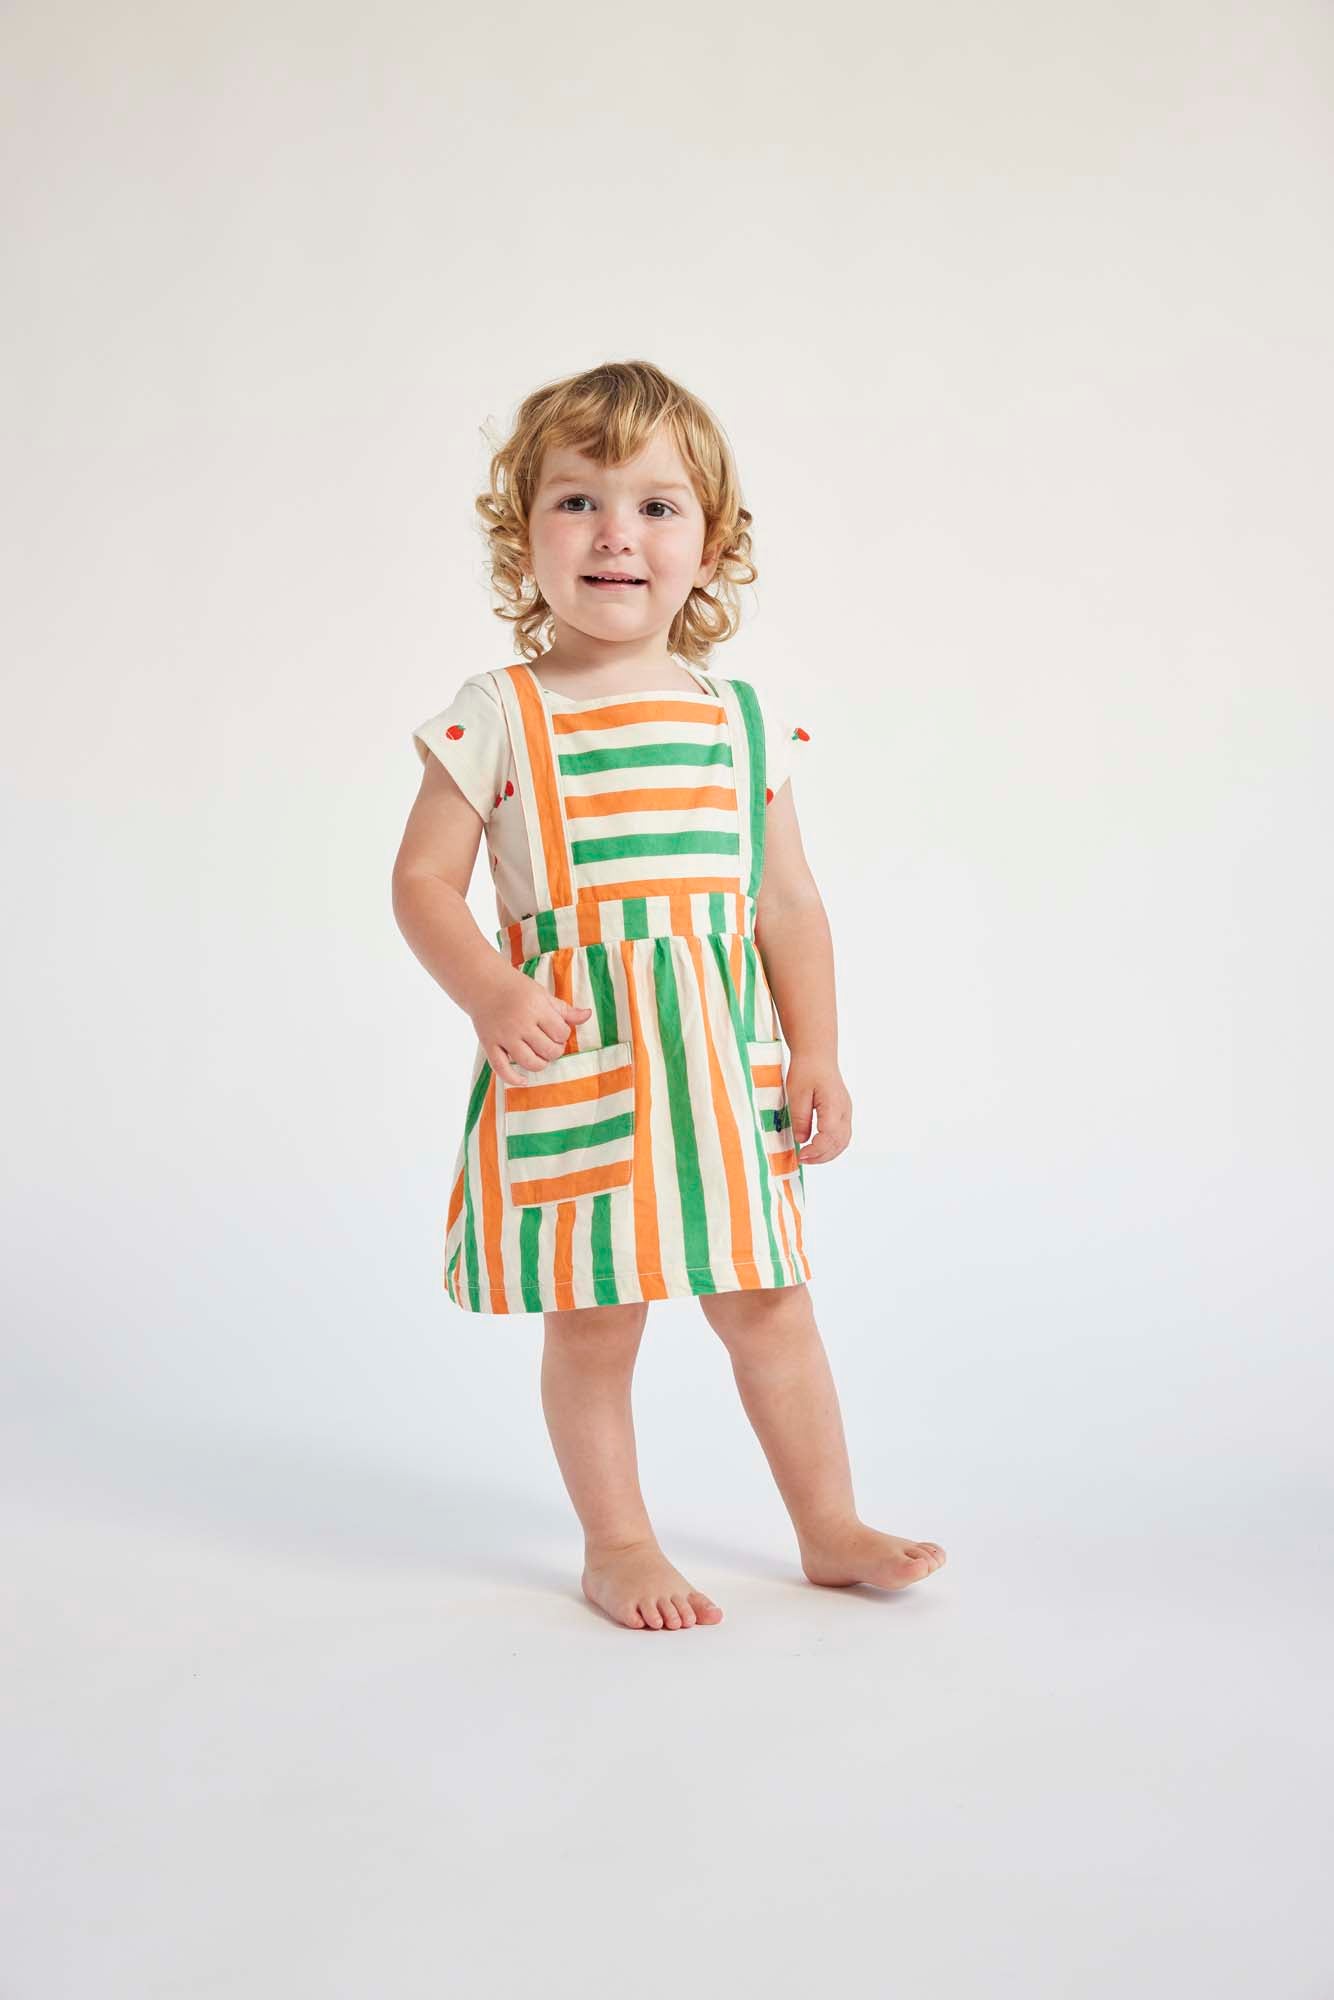 Vertical Stripes Woven Baby Dress